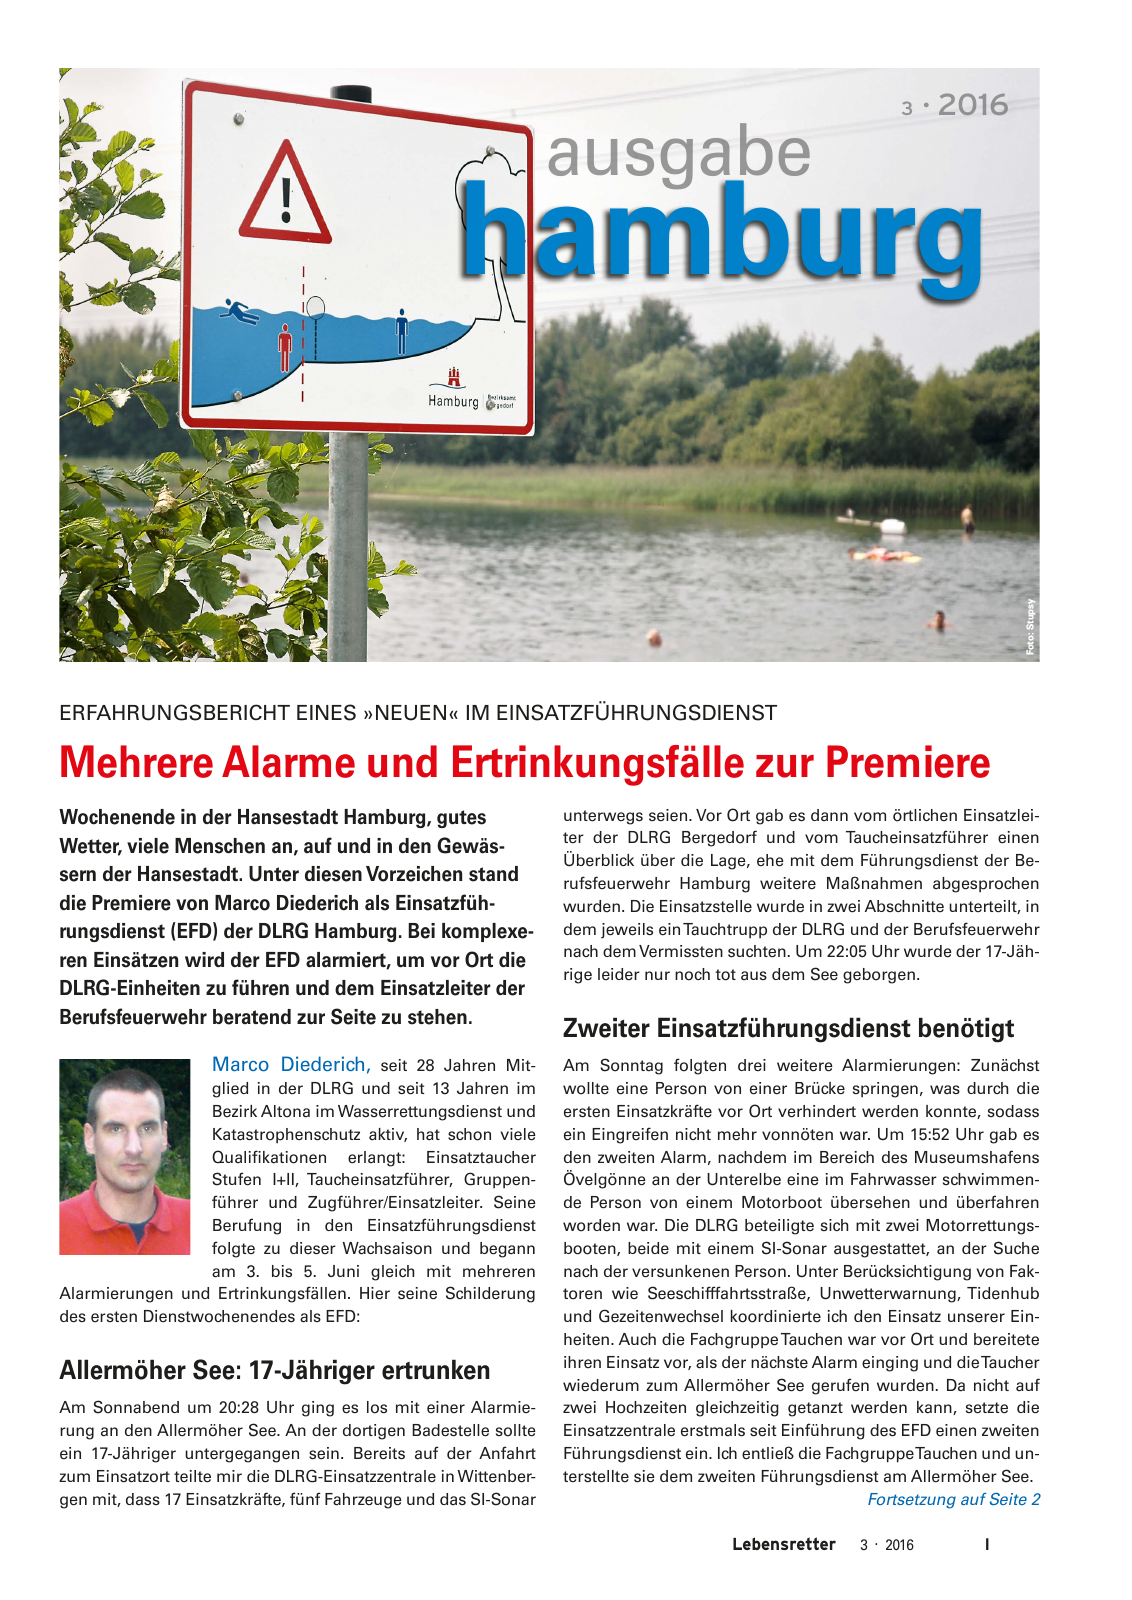 Vorschau Lebensretter 3/2016 - Regionalausgabe Hamburg Seite 3